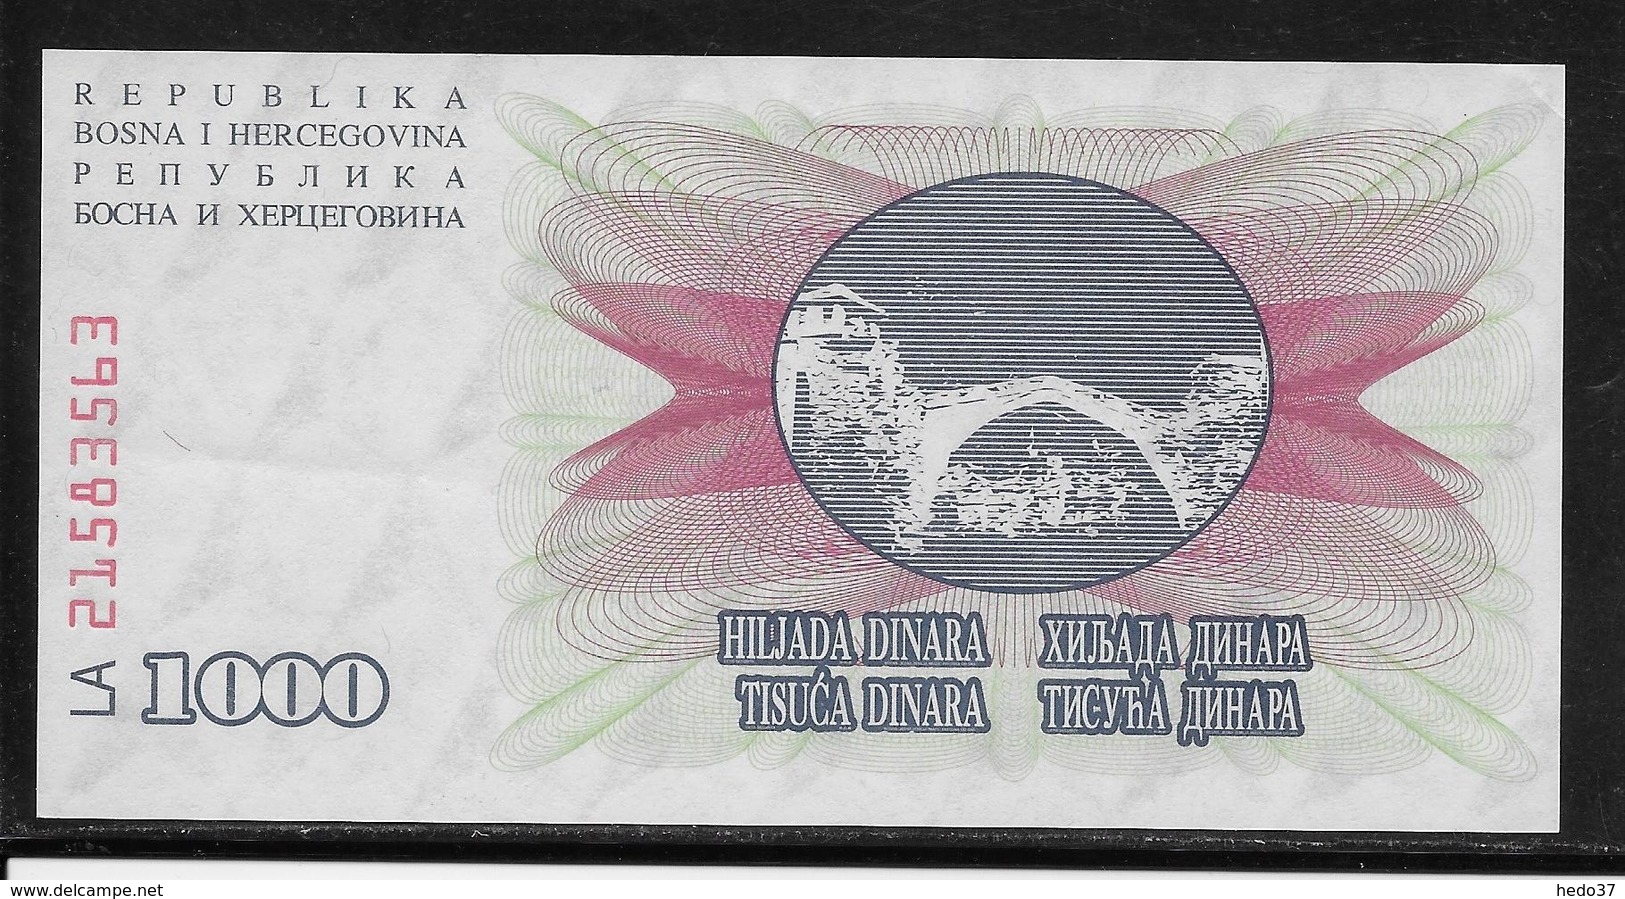 Bosnie-Herzegovine - 1000 Dinara - Pick N° 15 - NEUF - Bosnien-Herzegowina